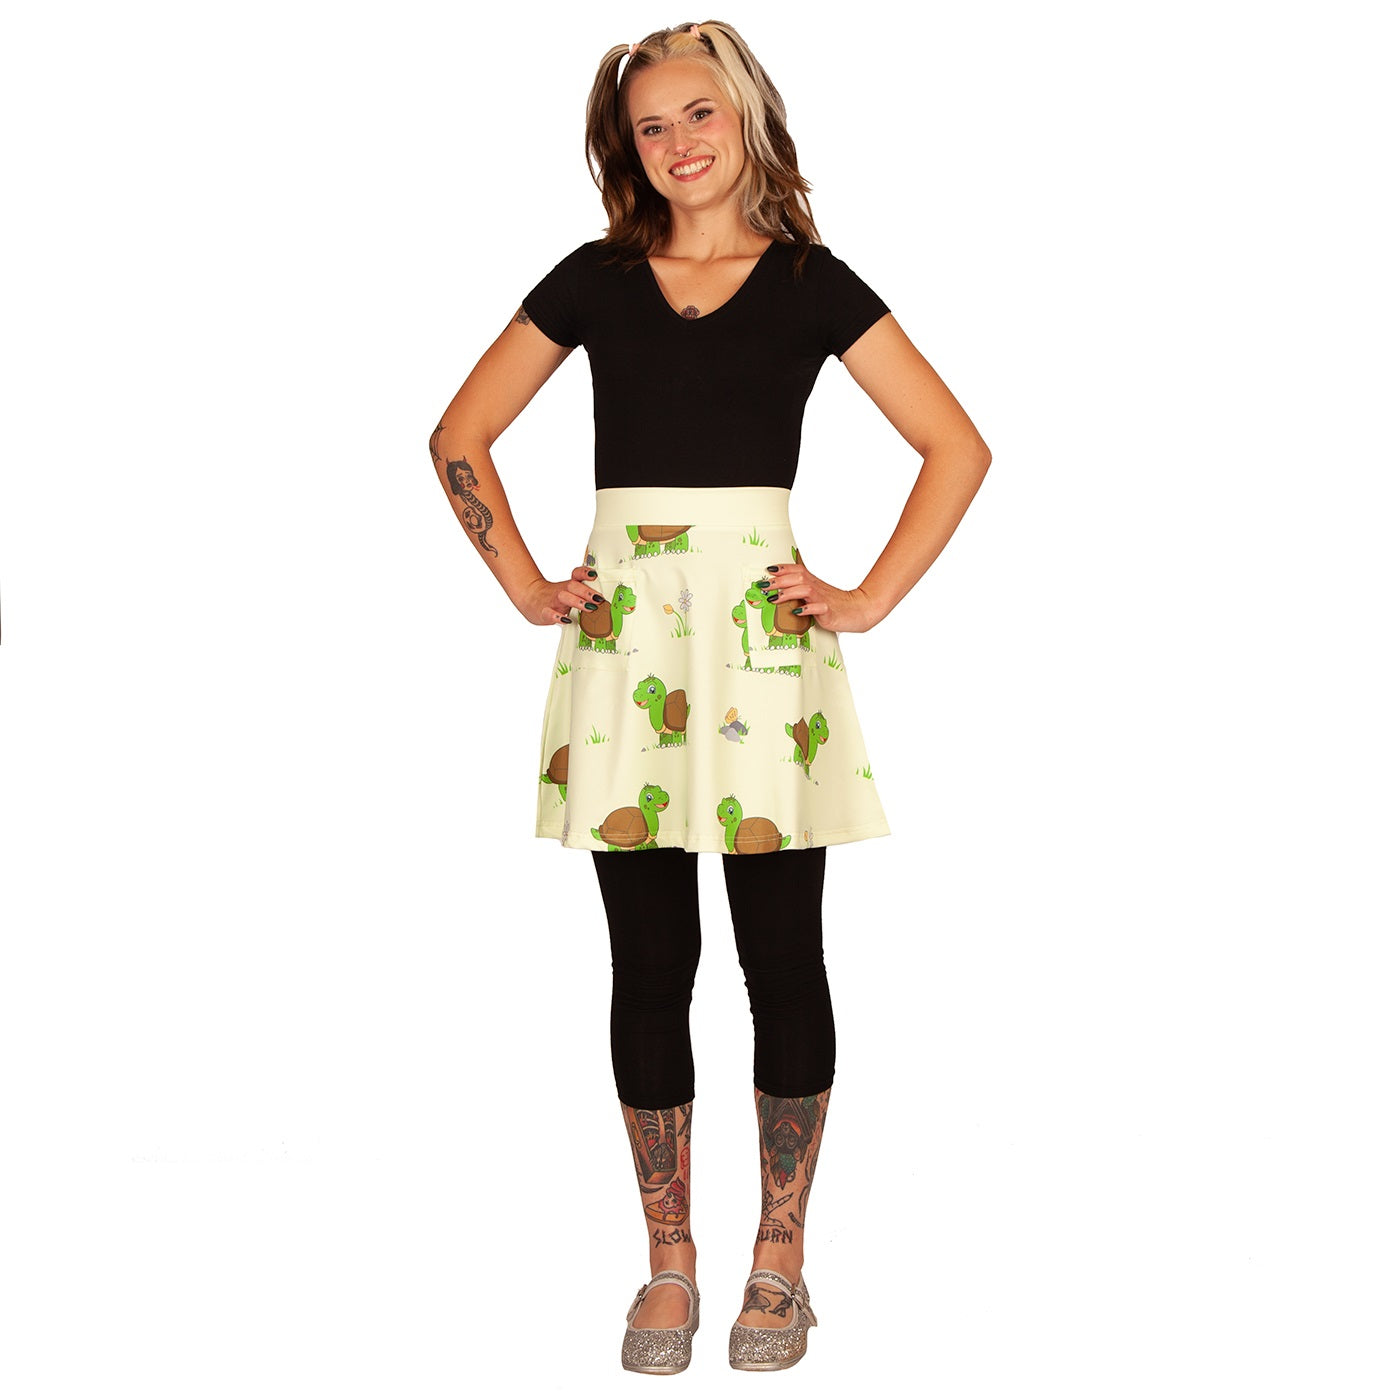 Wisdom Short Skirt by RainbowsAndFairies.com.au (Tortoise - Turle - Skirt With Pockets - Aline Skirt - Vintage Inspired - Kitsch - Animal Print) - SKU: CL_SHORT_WISDO_ORG - Pic-03